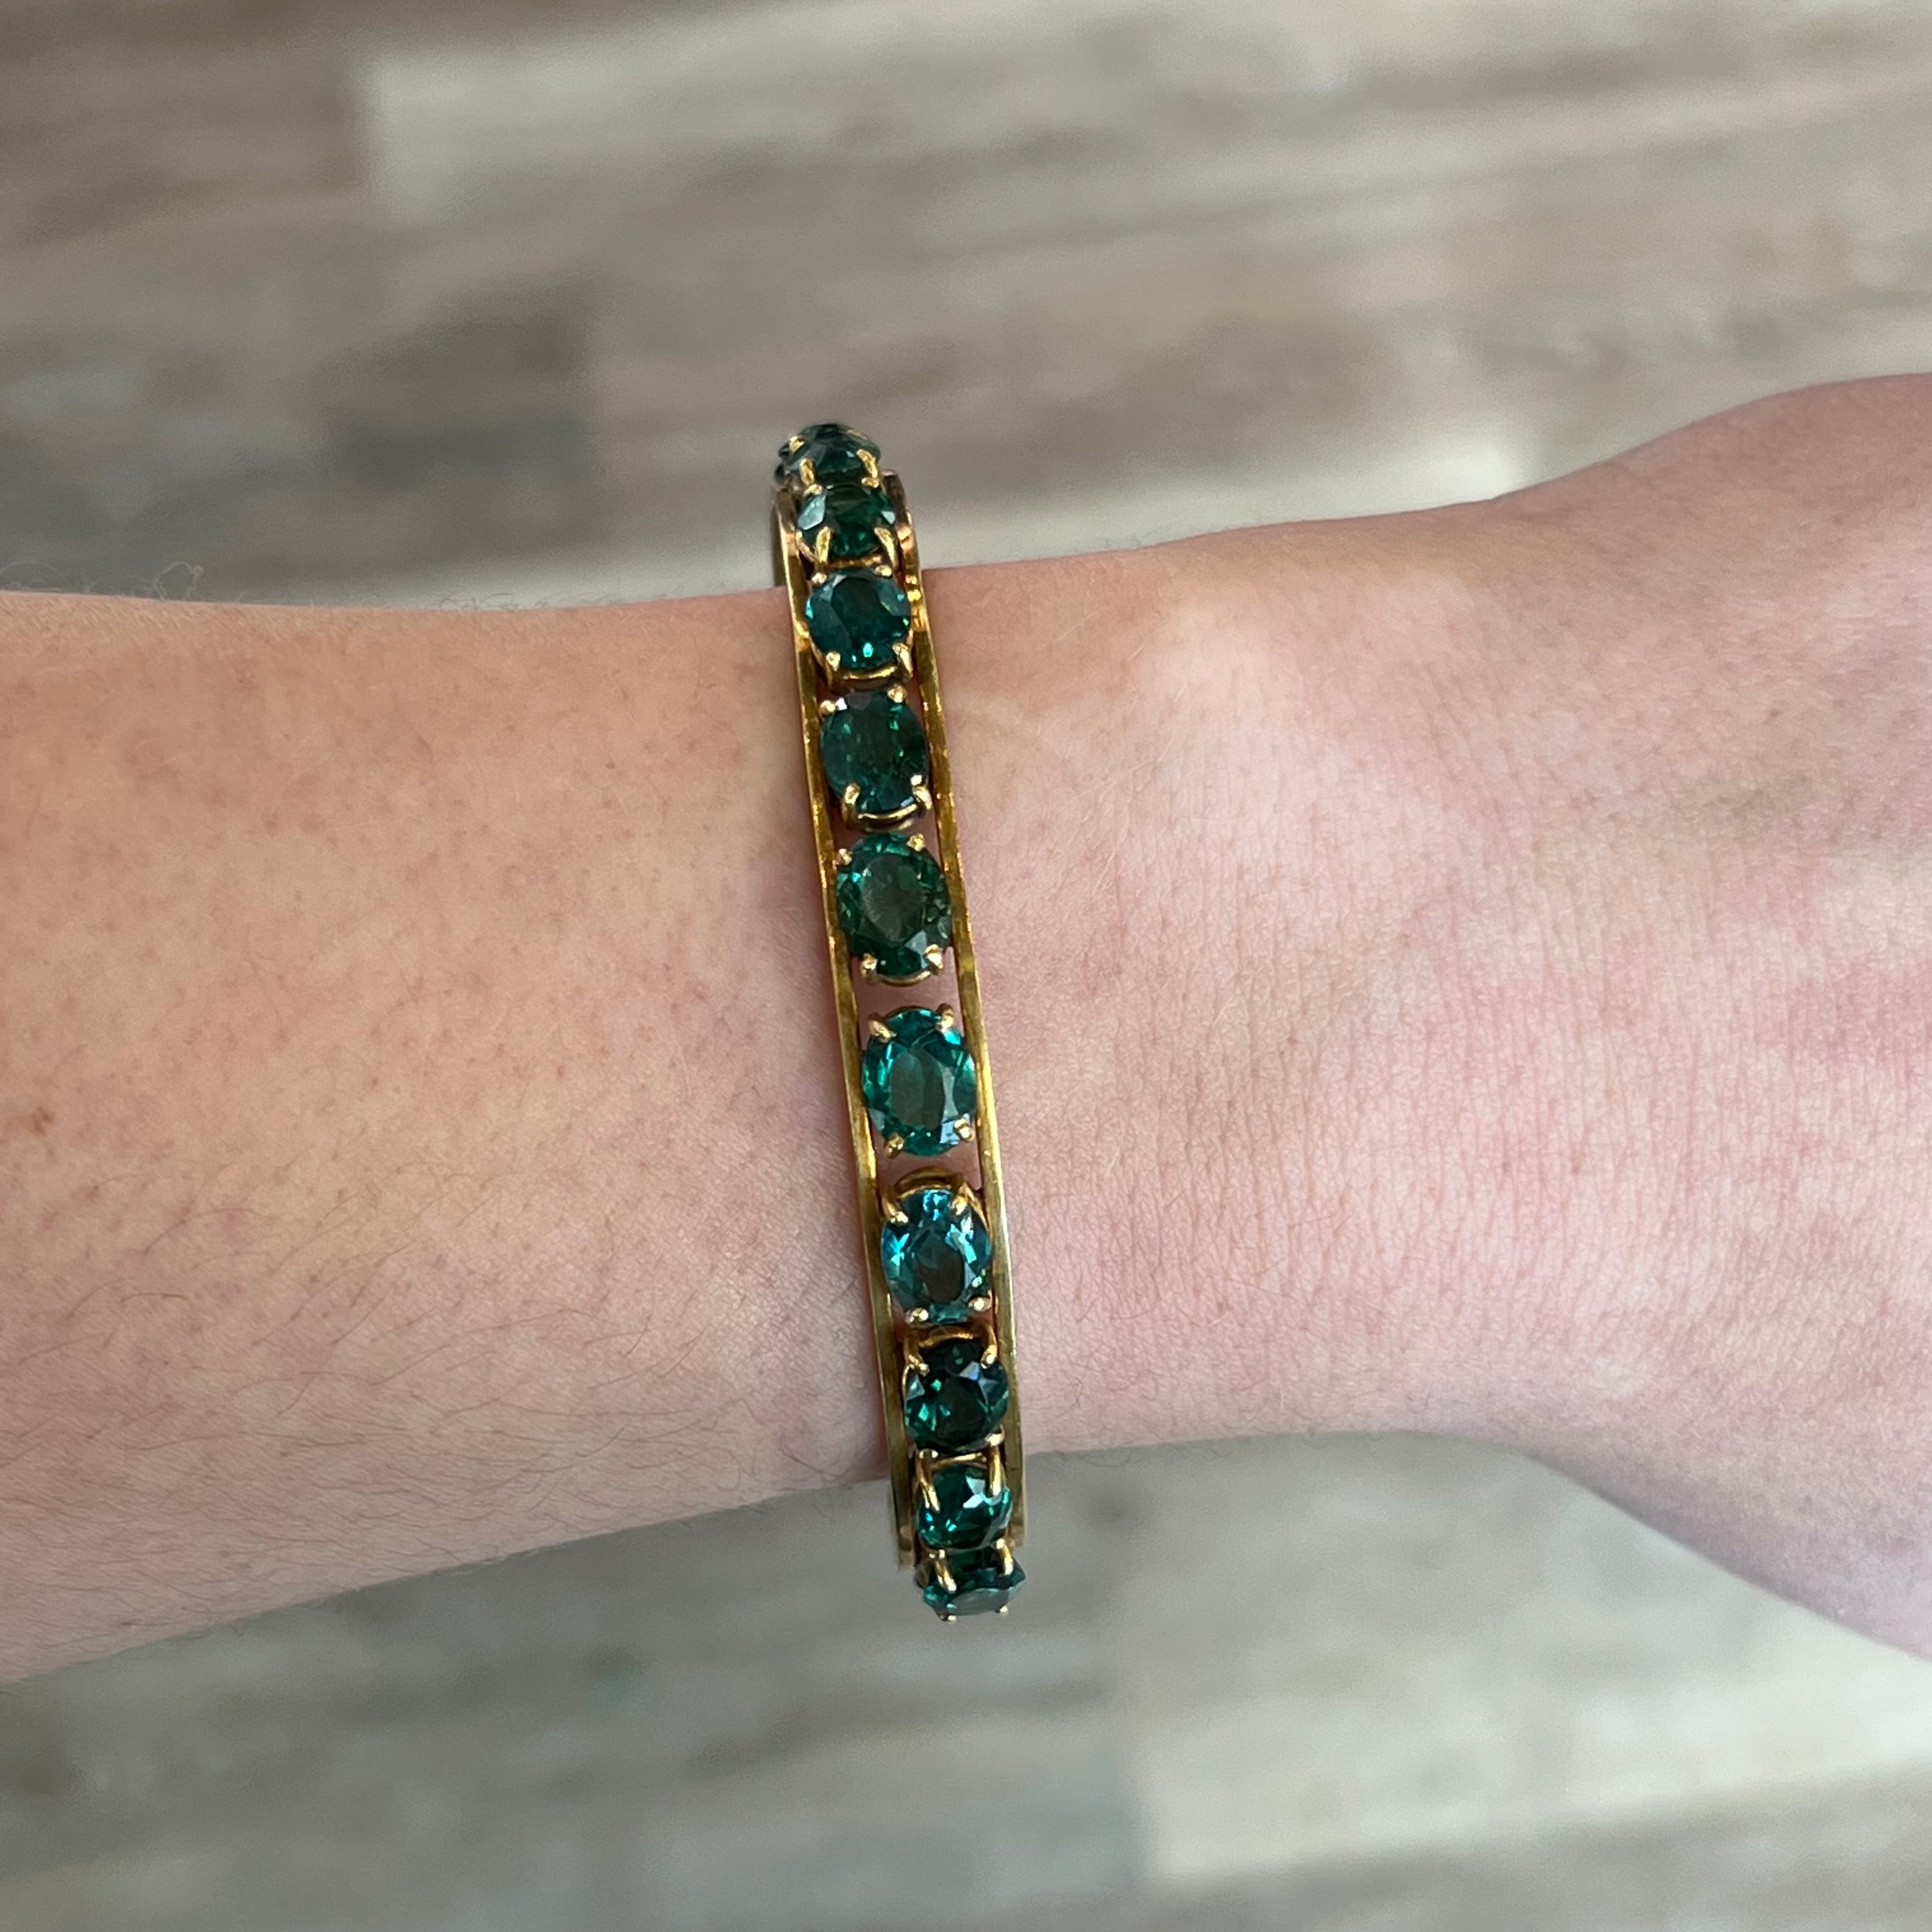 Buy Plus Value Green Tourmaline Bracelet - Reiki Crystal Chakra Aura  Healing for Men Women Unisex (Beads Size 8mm, Jute Bag) at Amazon.in